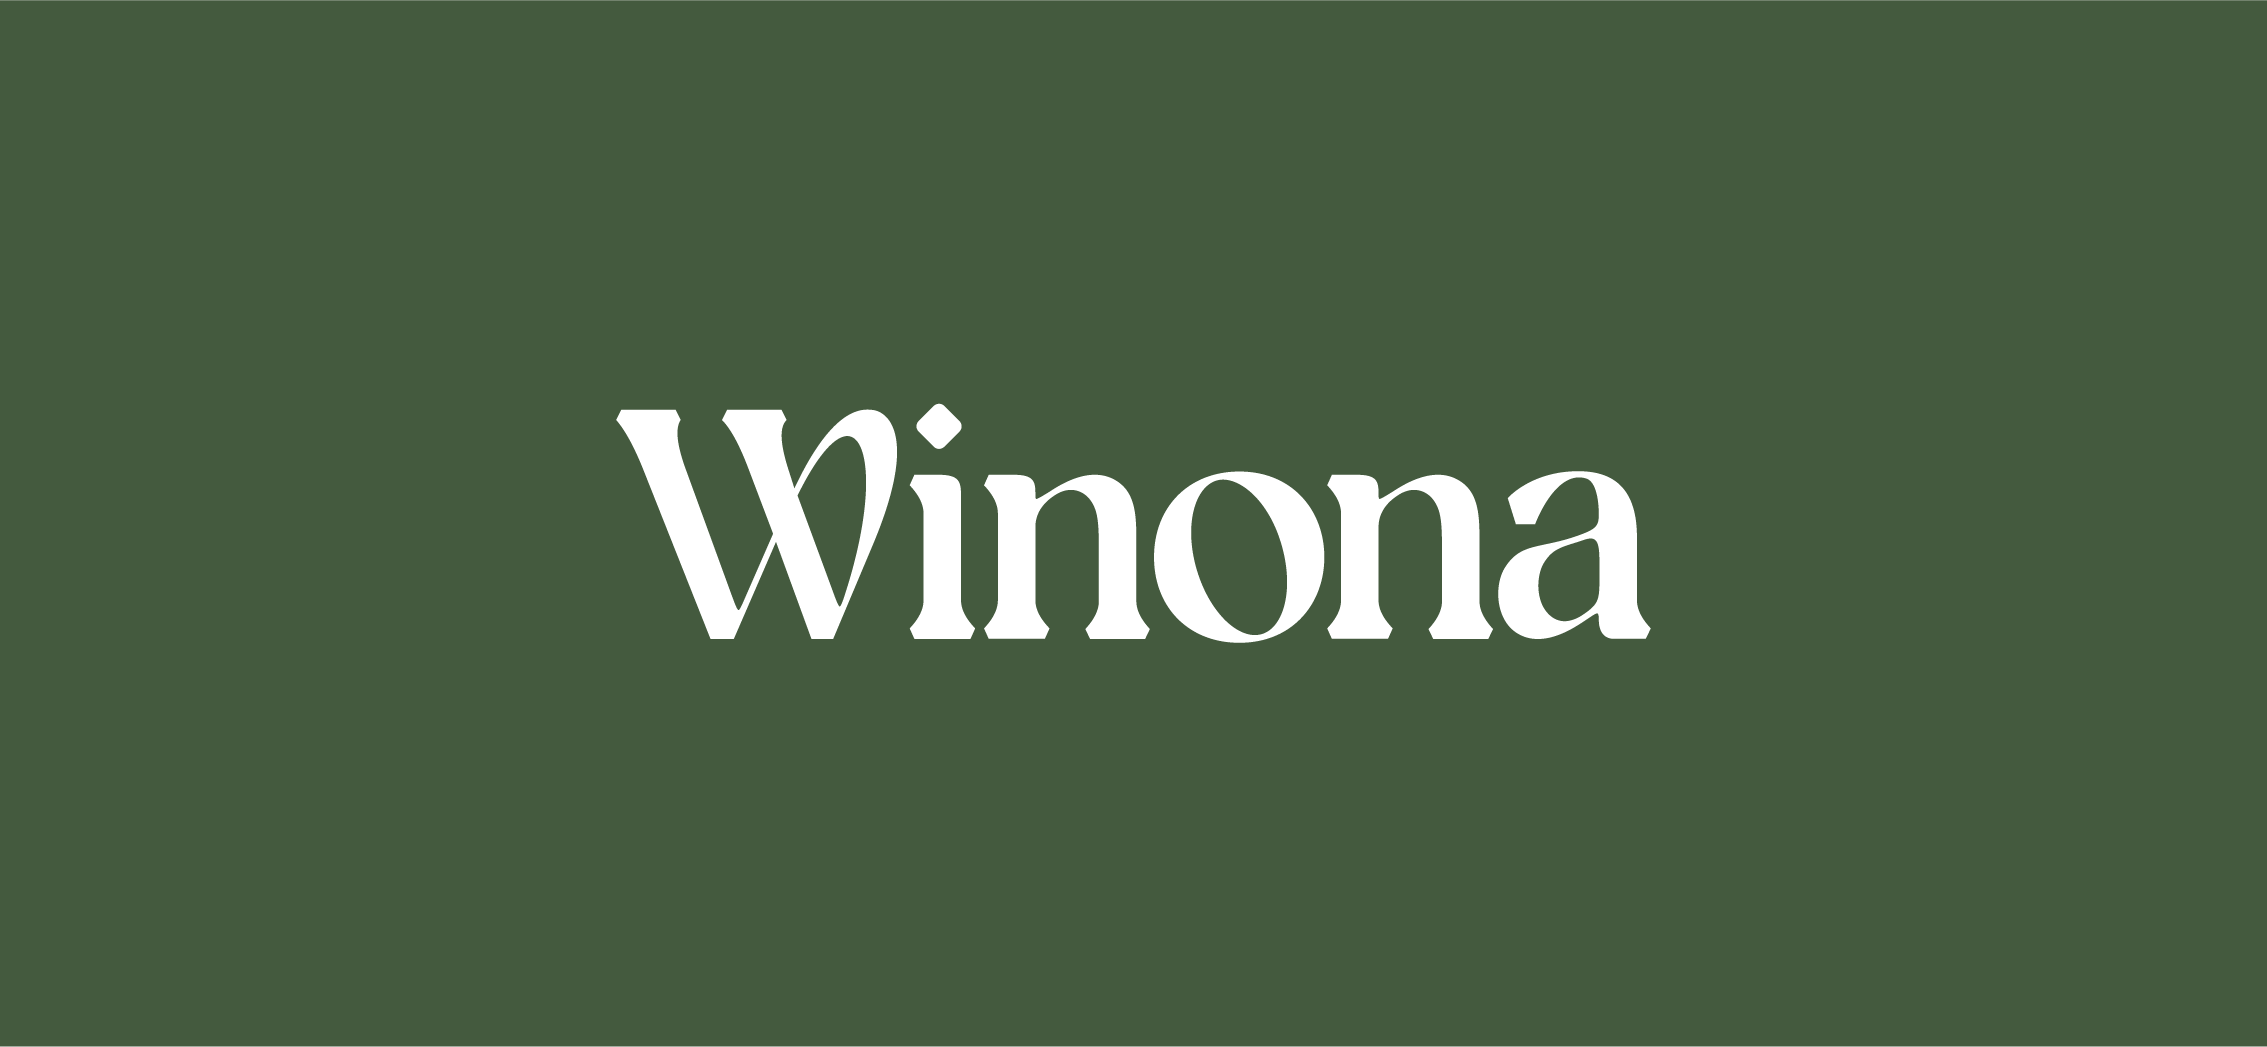 Winona logotype